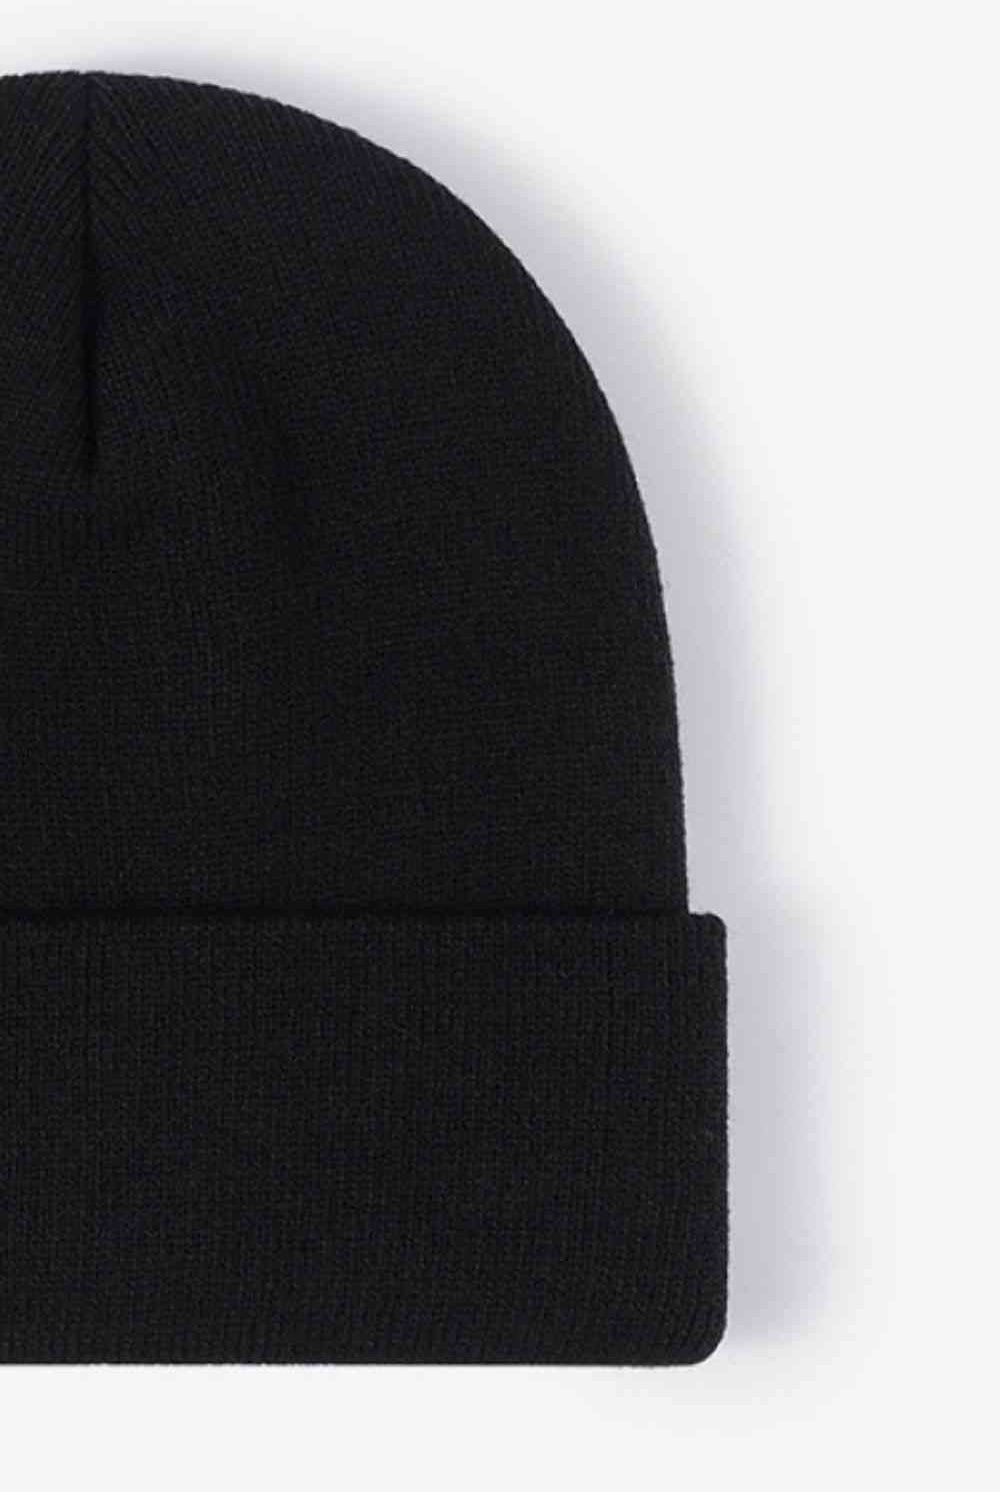 Black Cuff Knit Beanie Winter Accessories